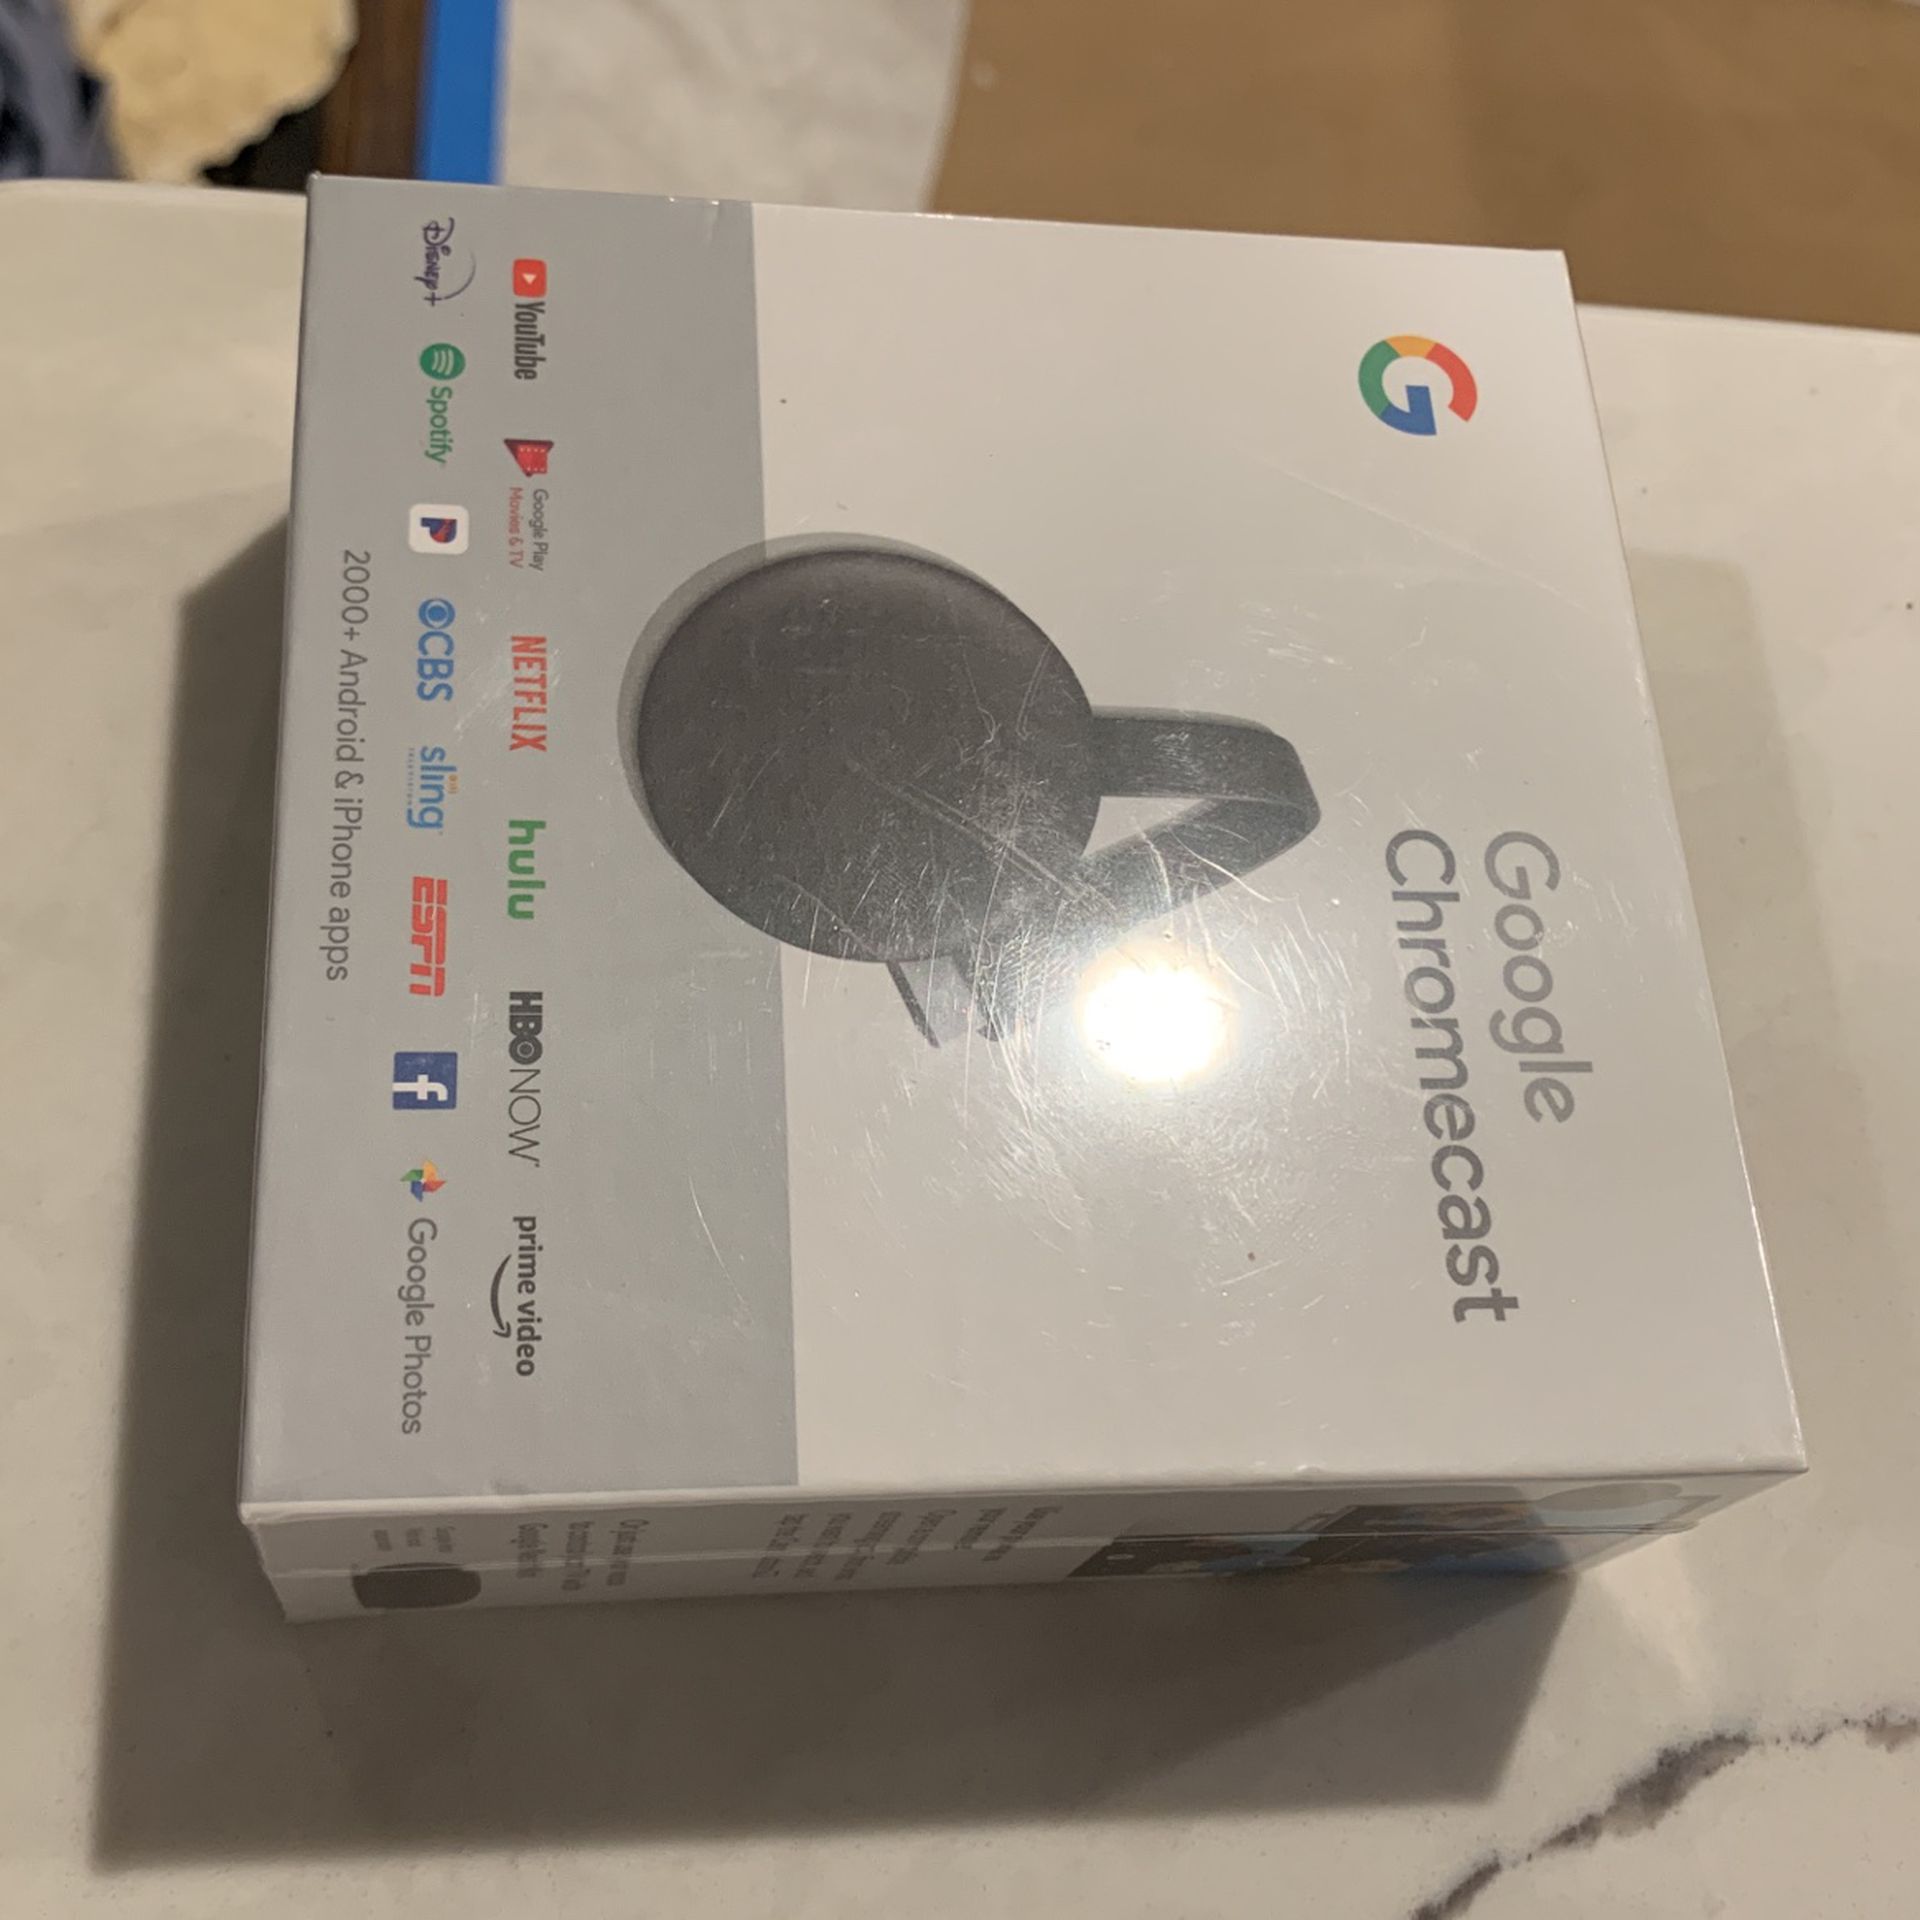 Google Chromecast (Brand New In Box)